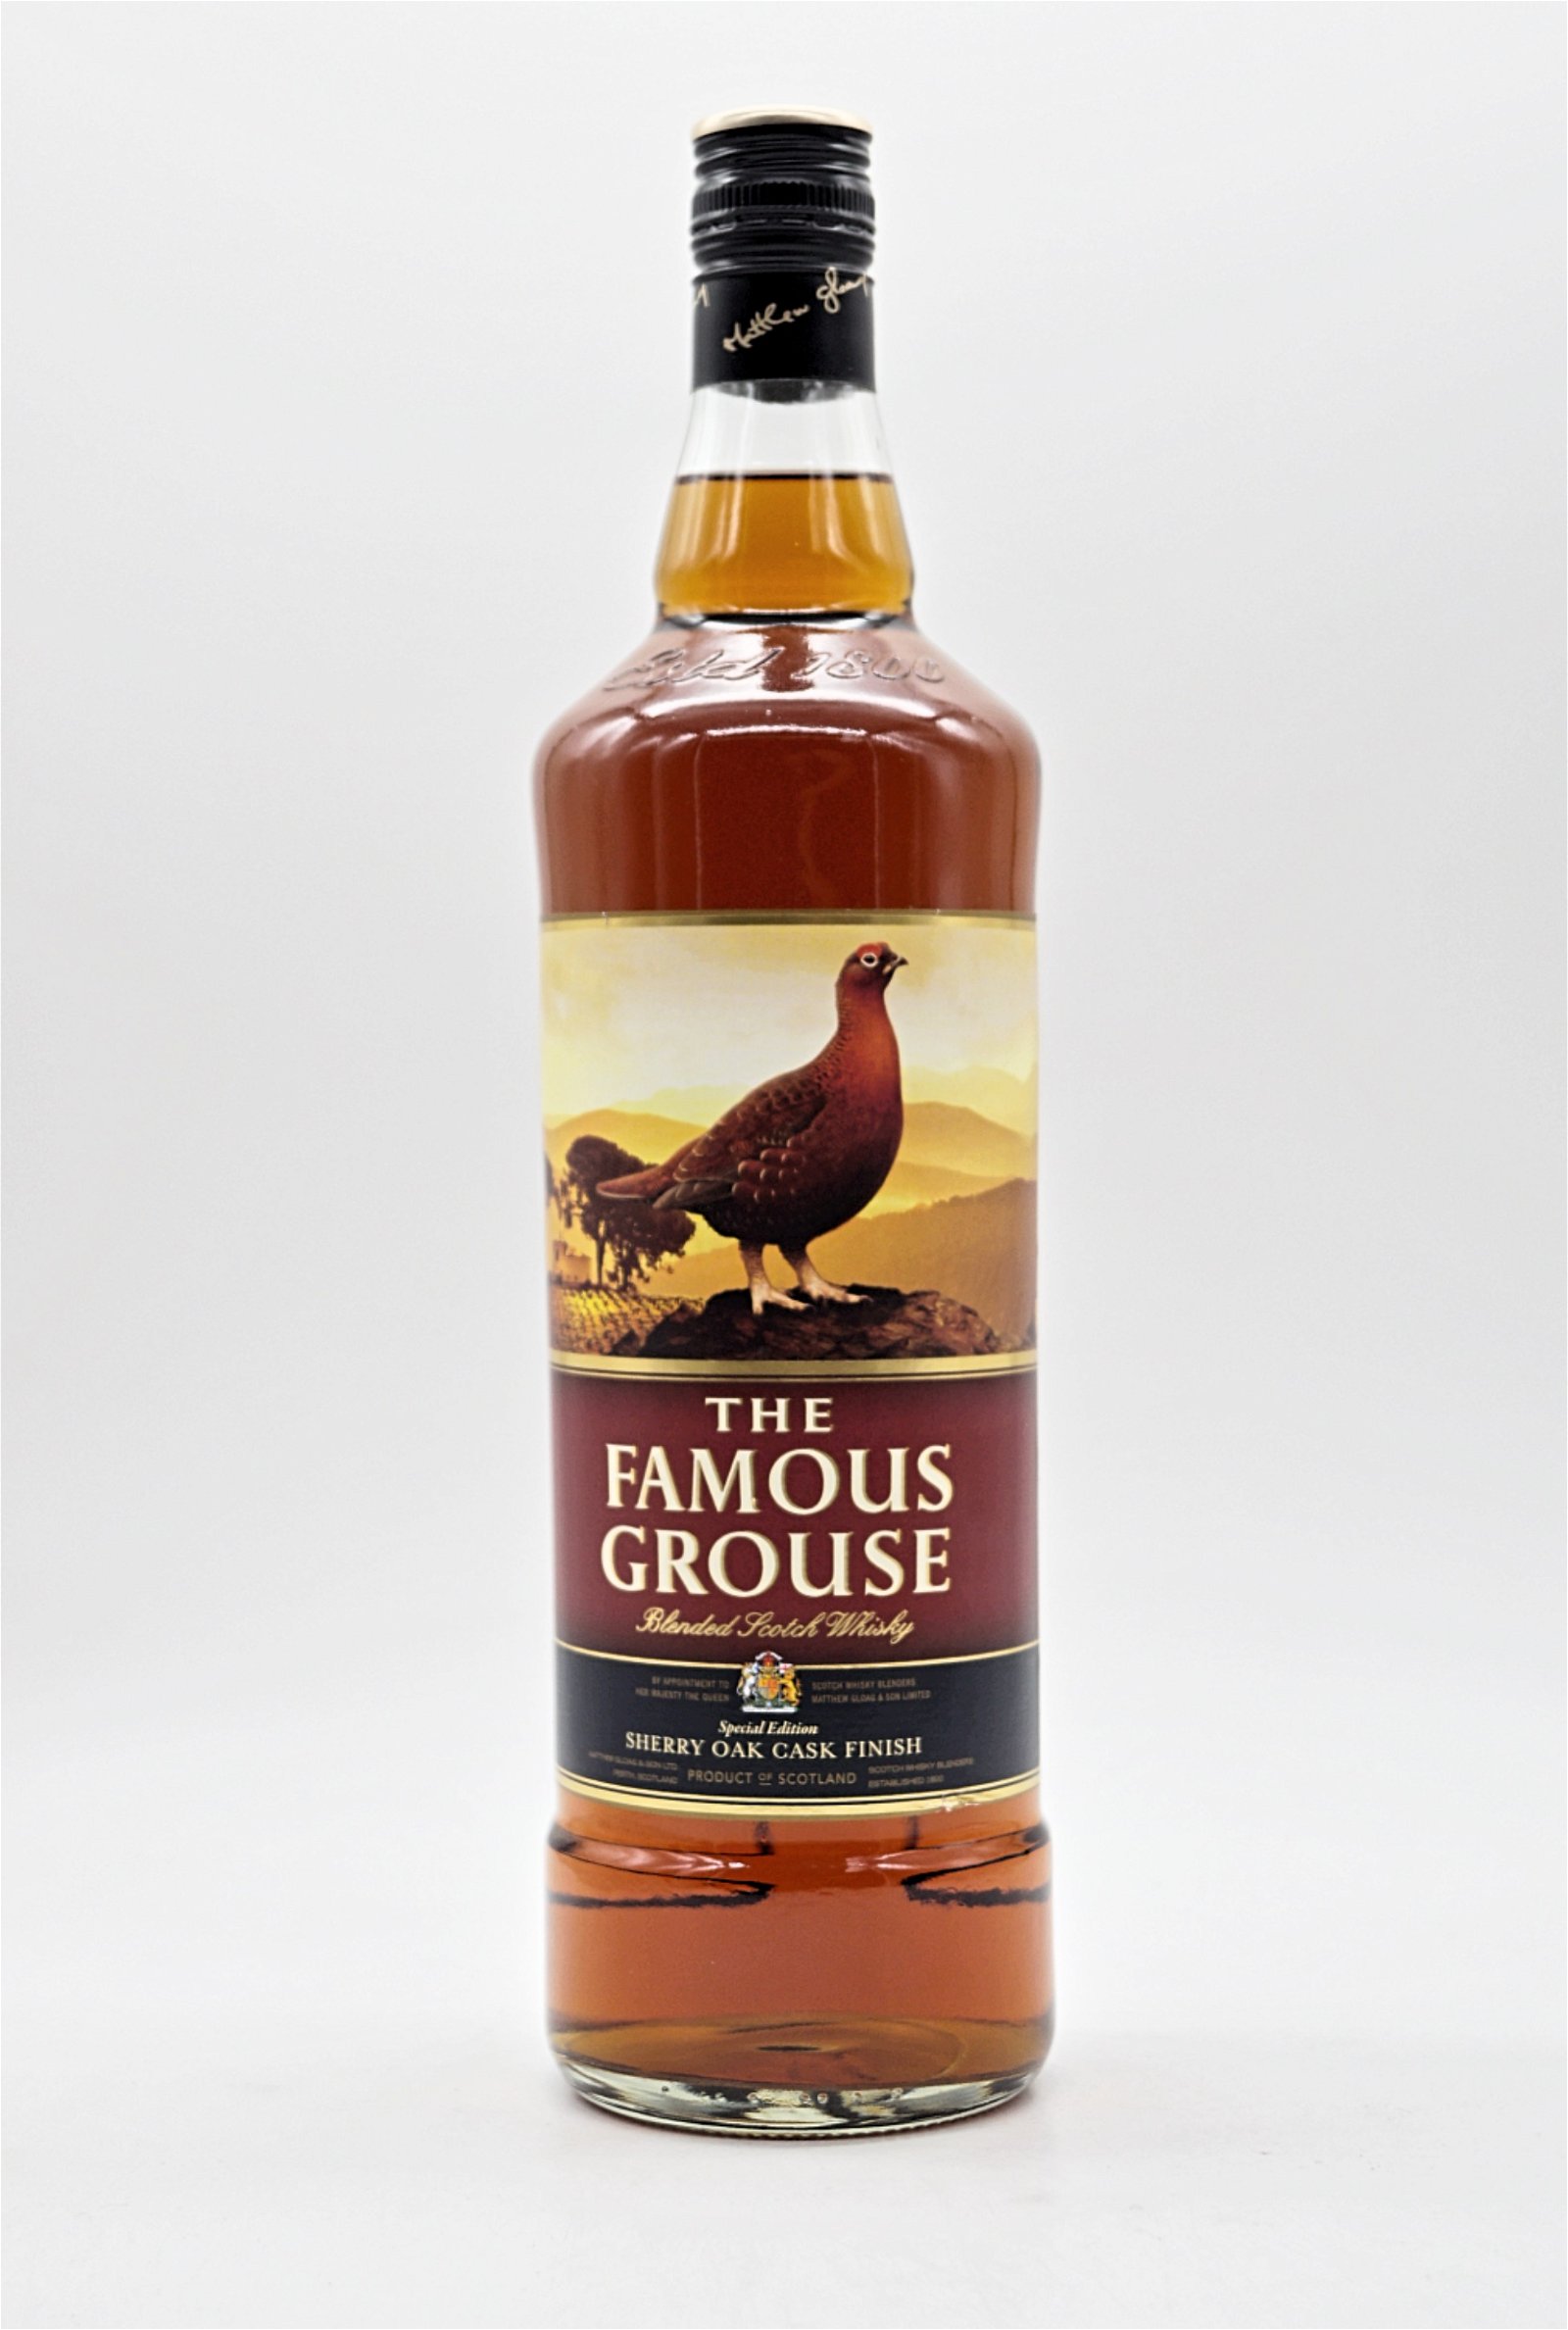 The Famous Grouse Sherry Oak Cask Finish Blended Scotch Whisky